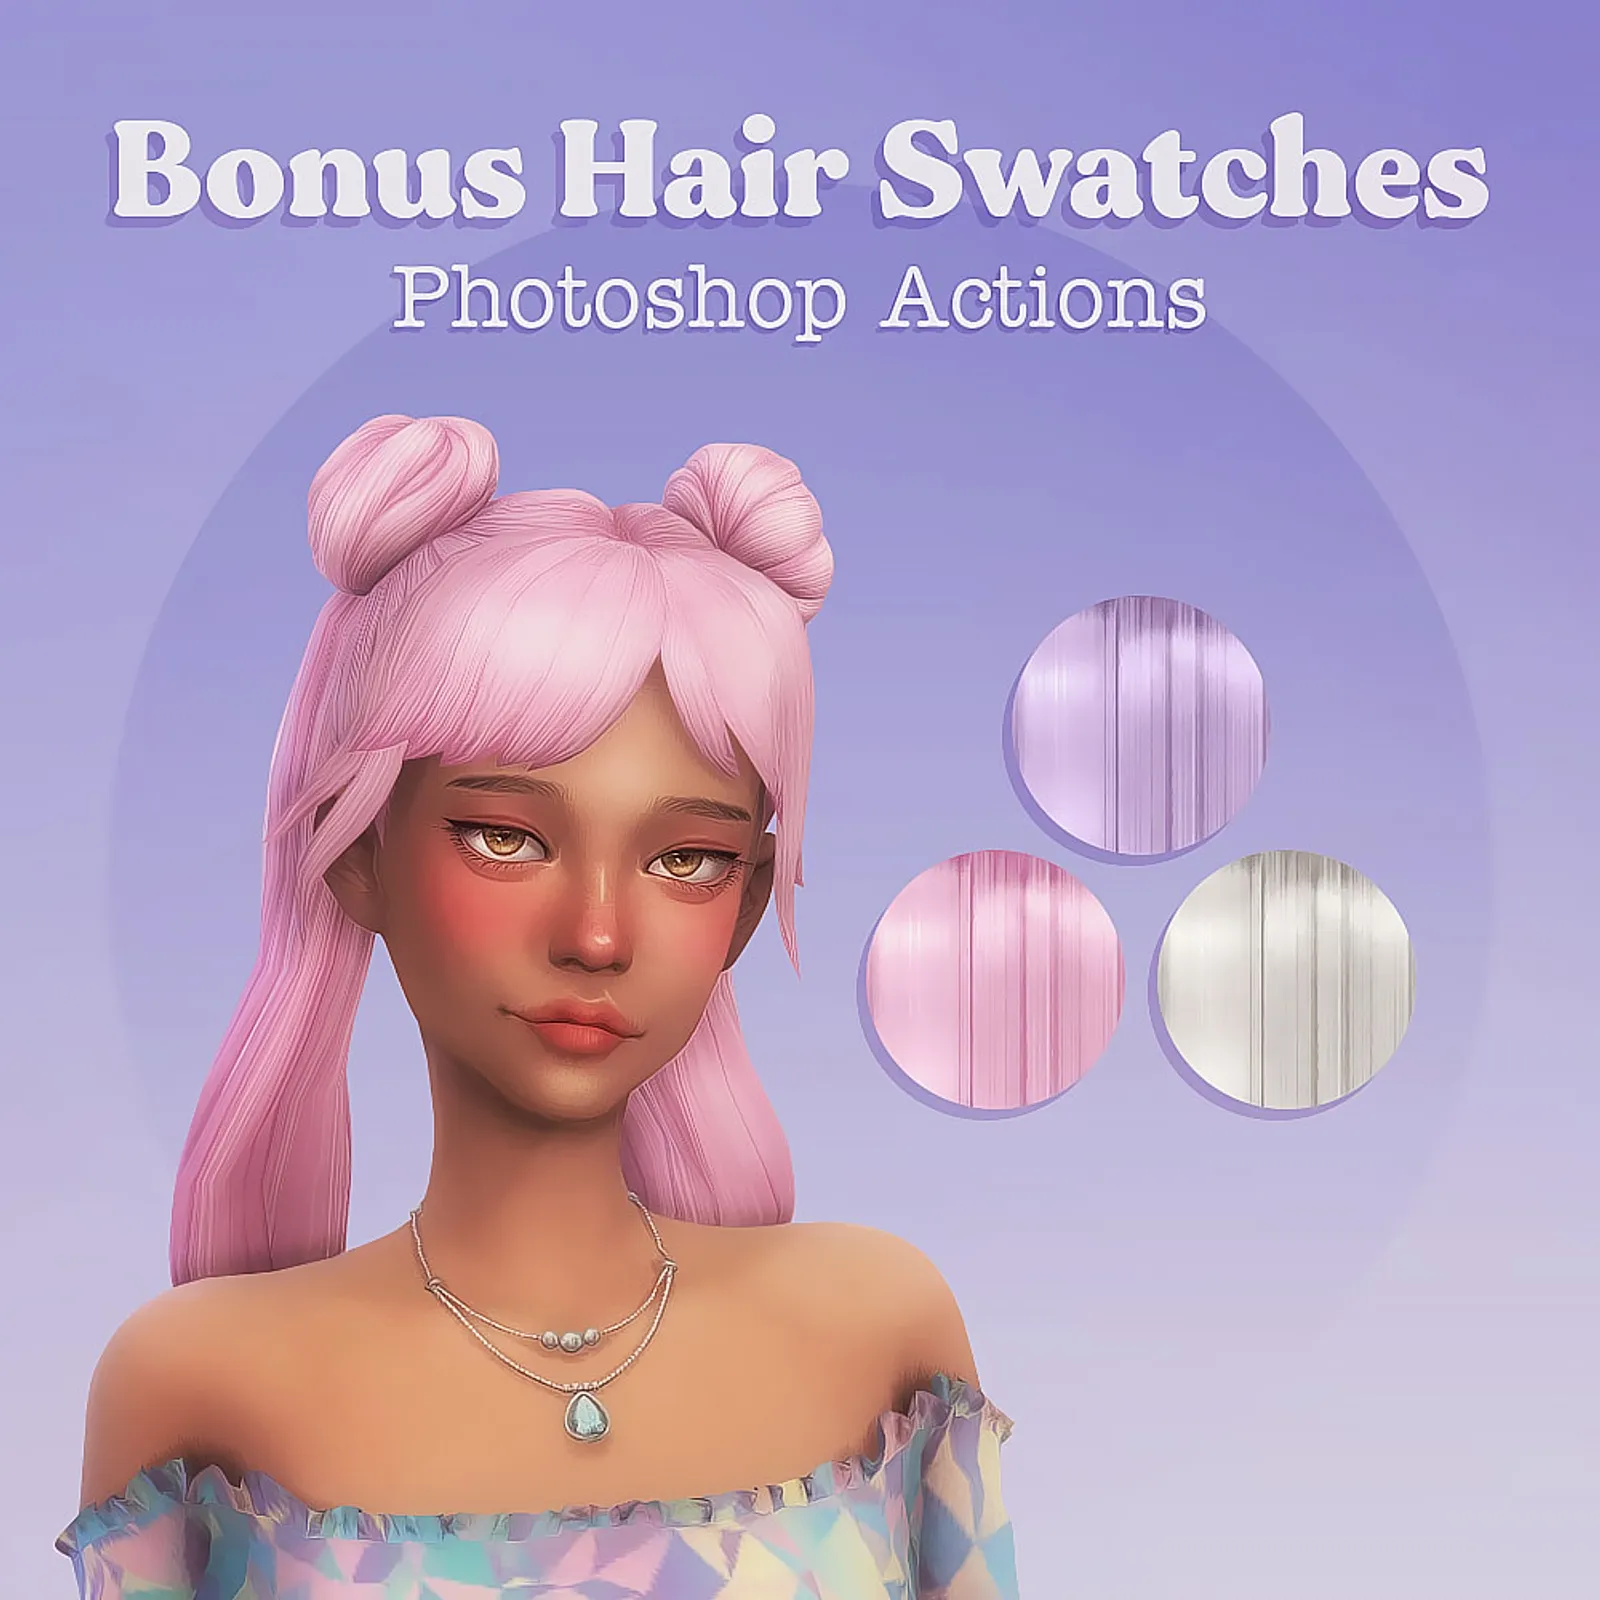 Bonus Hair Swatches